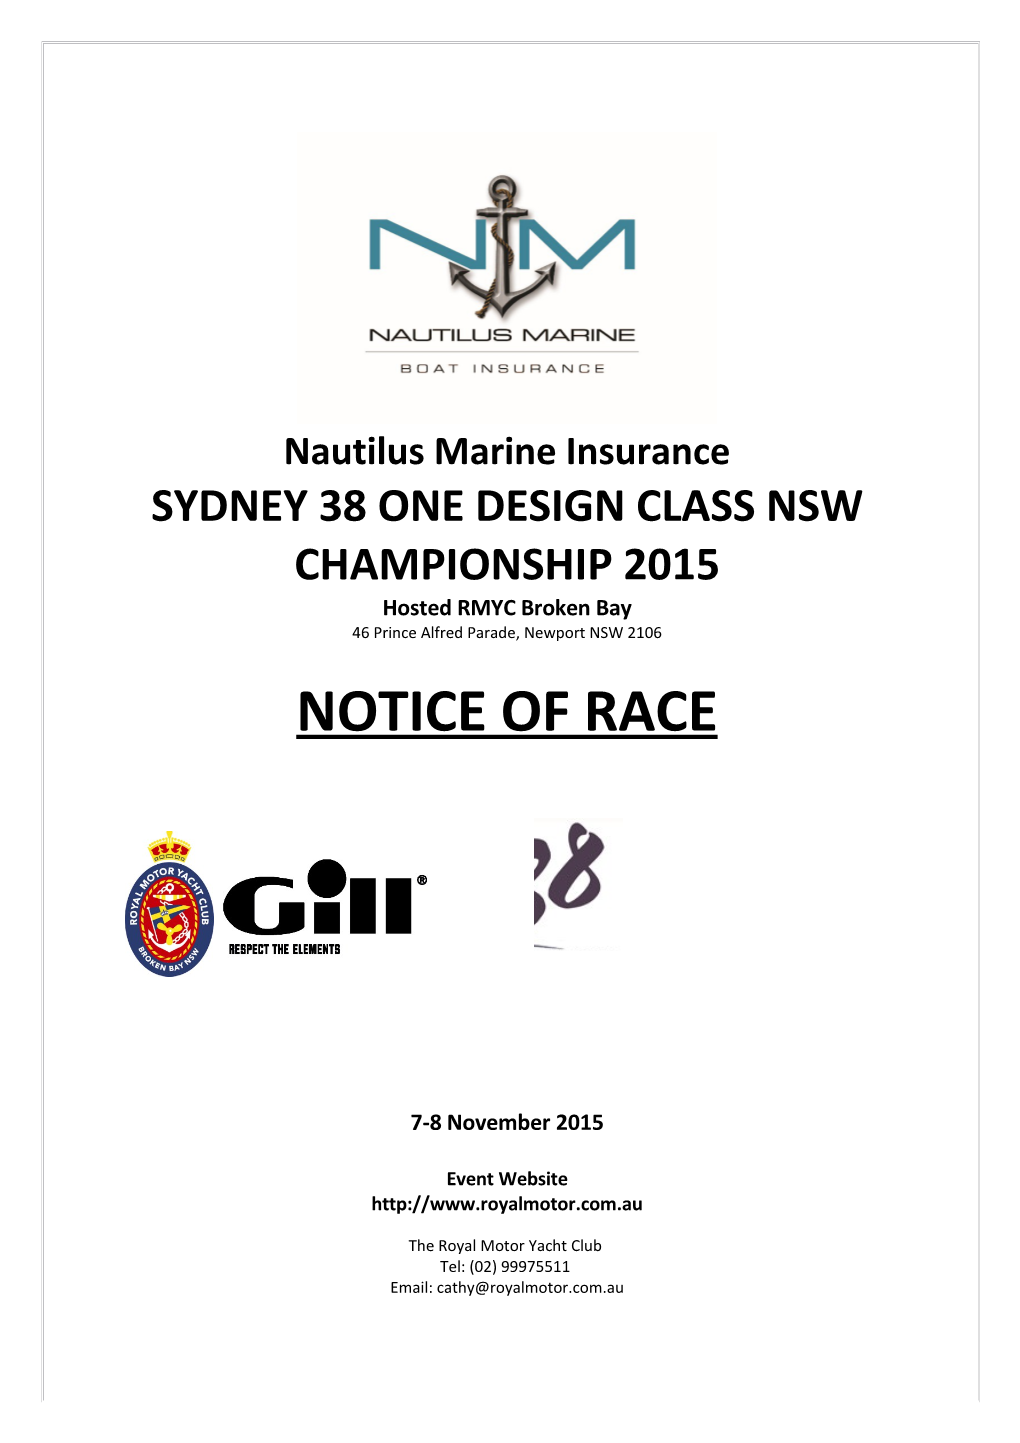 Sydney 38 One Design Class Nsw Championship 2015